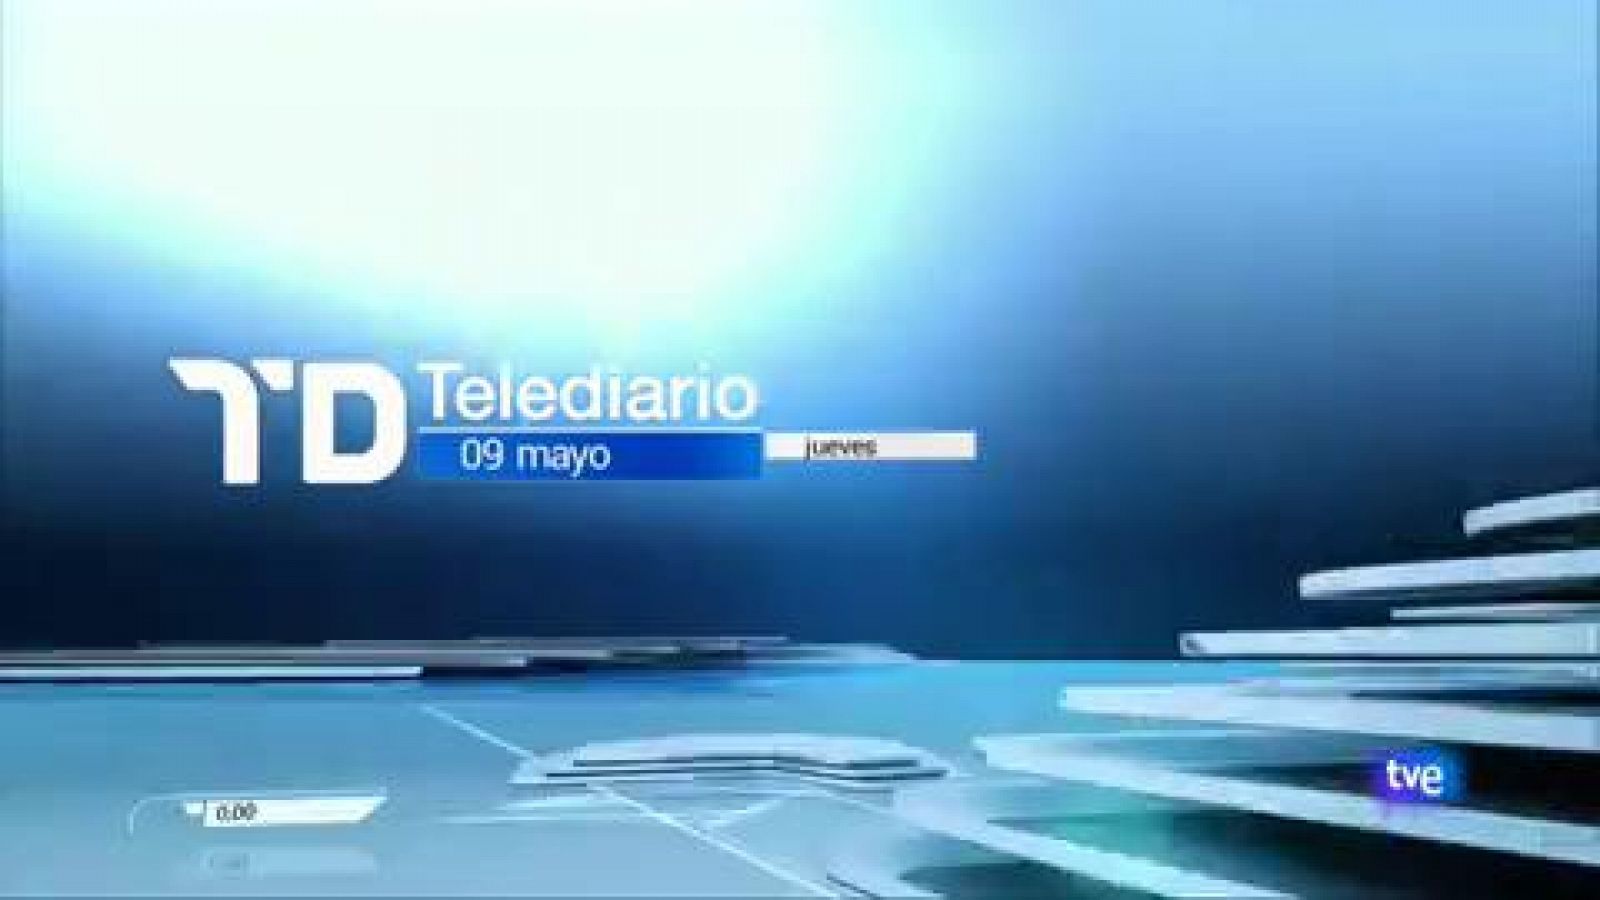 Telediario 1: Telediario 1 en 4' - 09/05/19 | RTVE Play